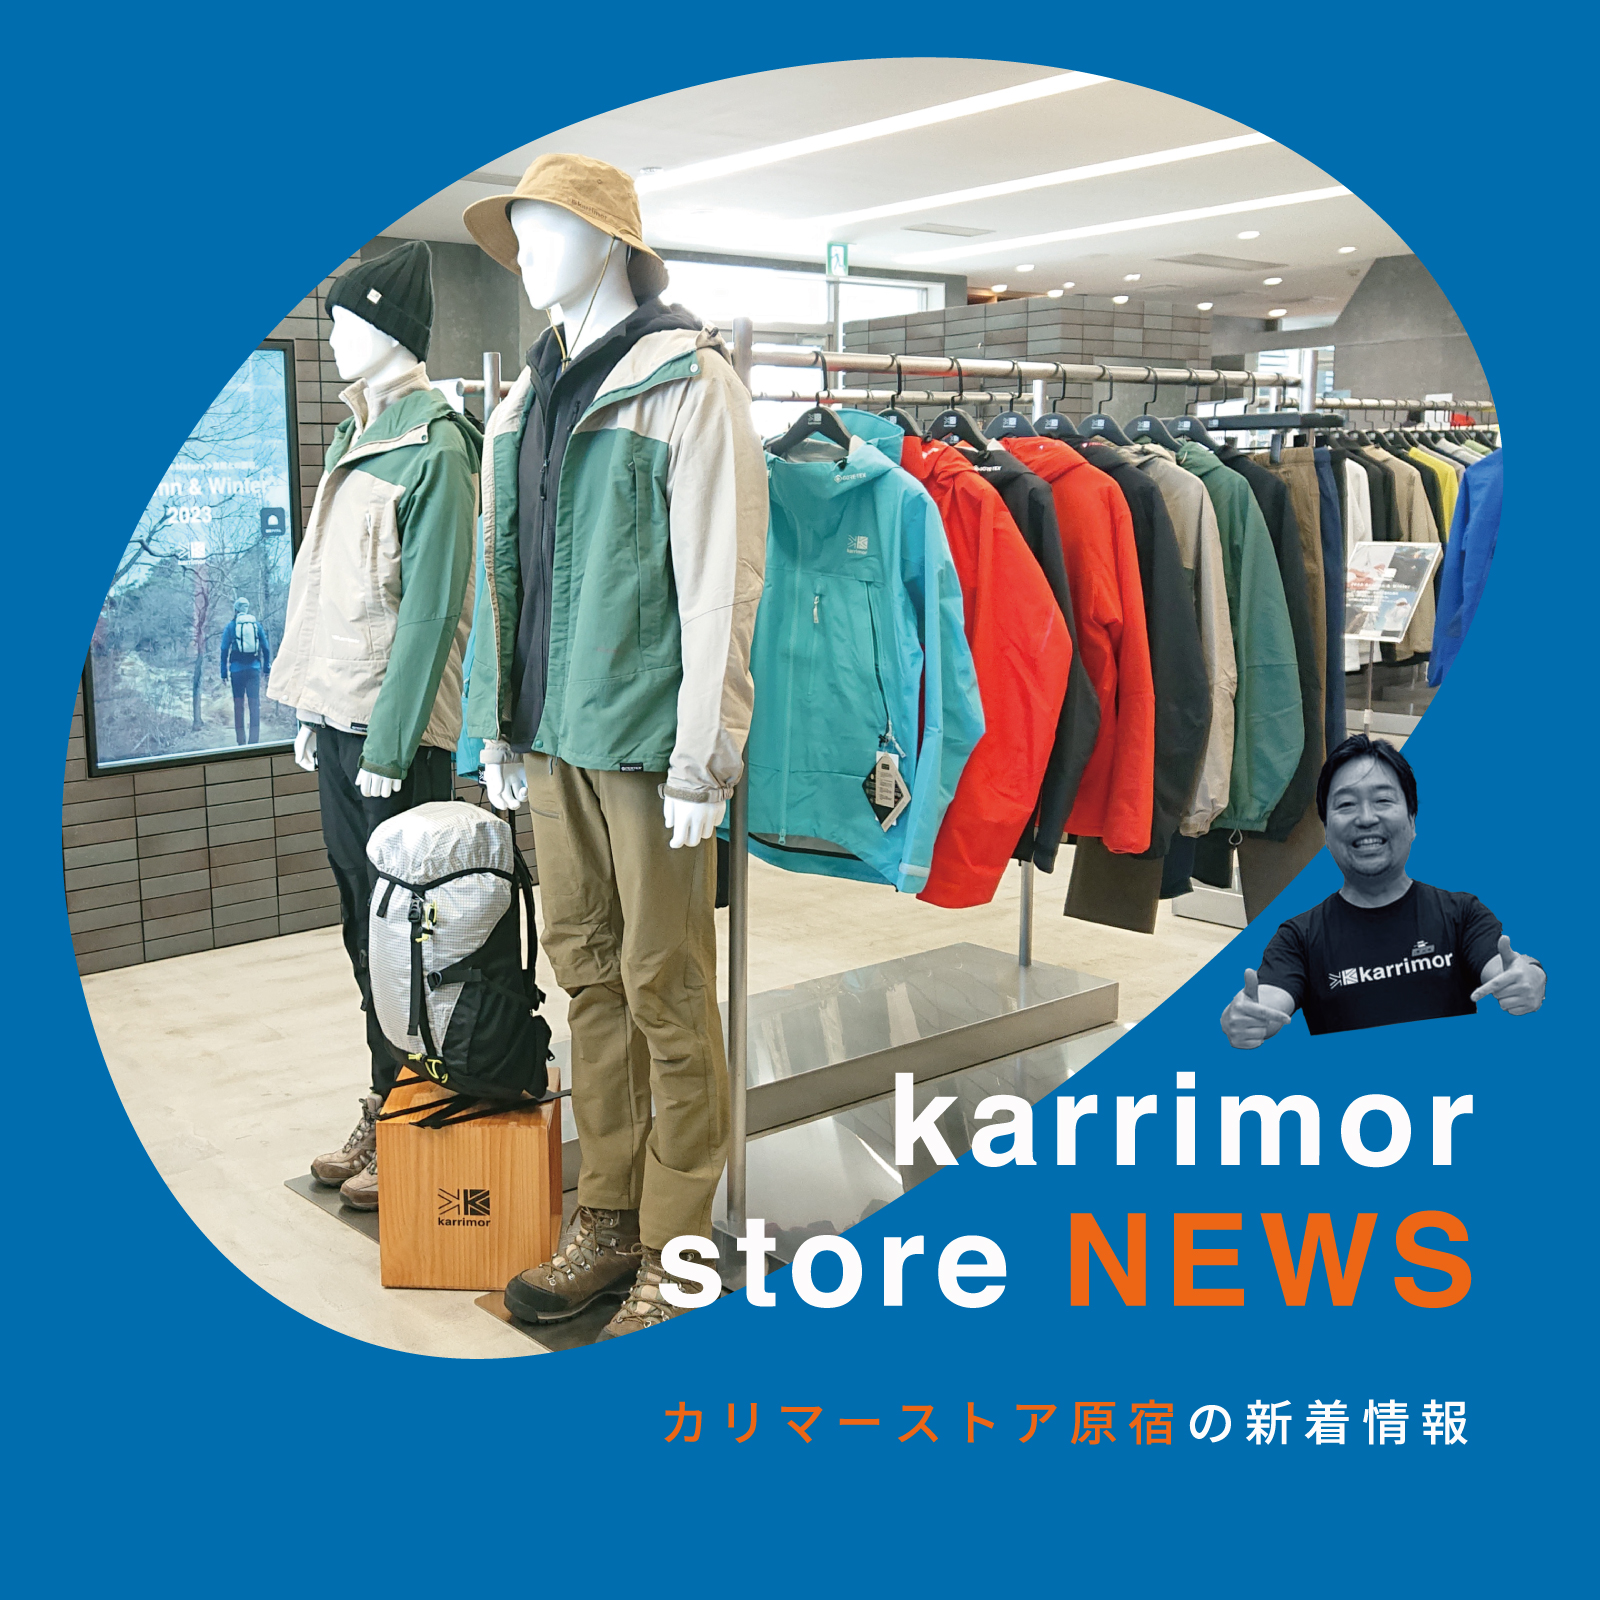 karrimor store NEWS !!原宿店の新着情報